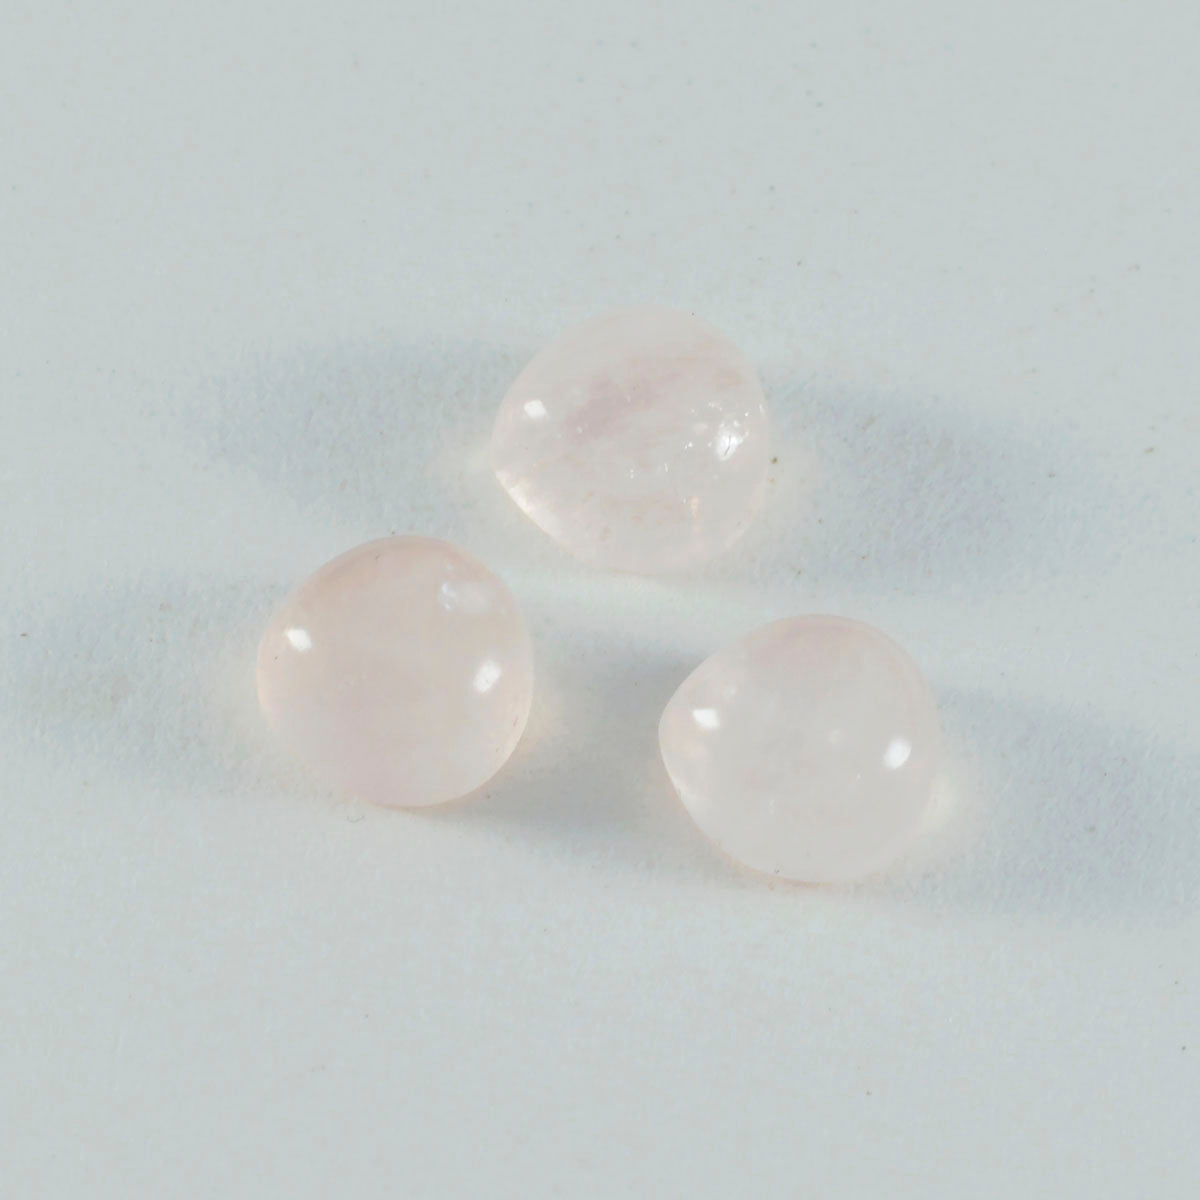 Riyogems 1PC Pink Rose Quartz Cabochon 14x14 mm Heart Shape A+1 Quality Loose Gemstone